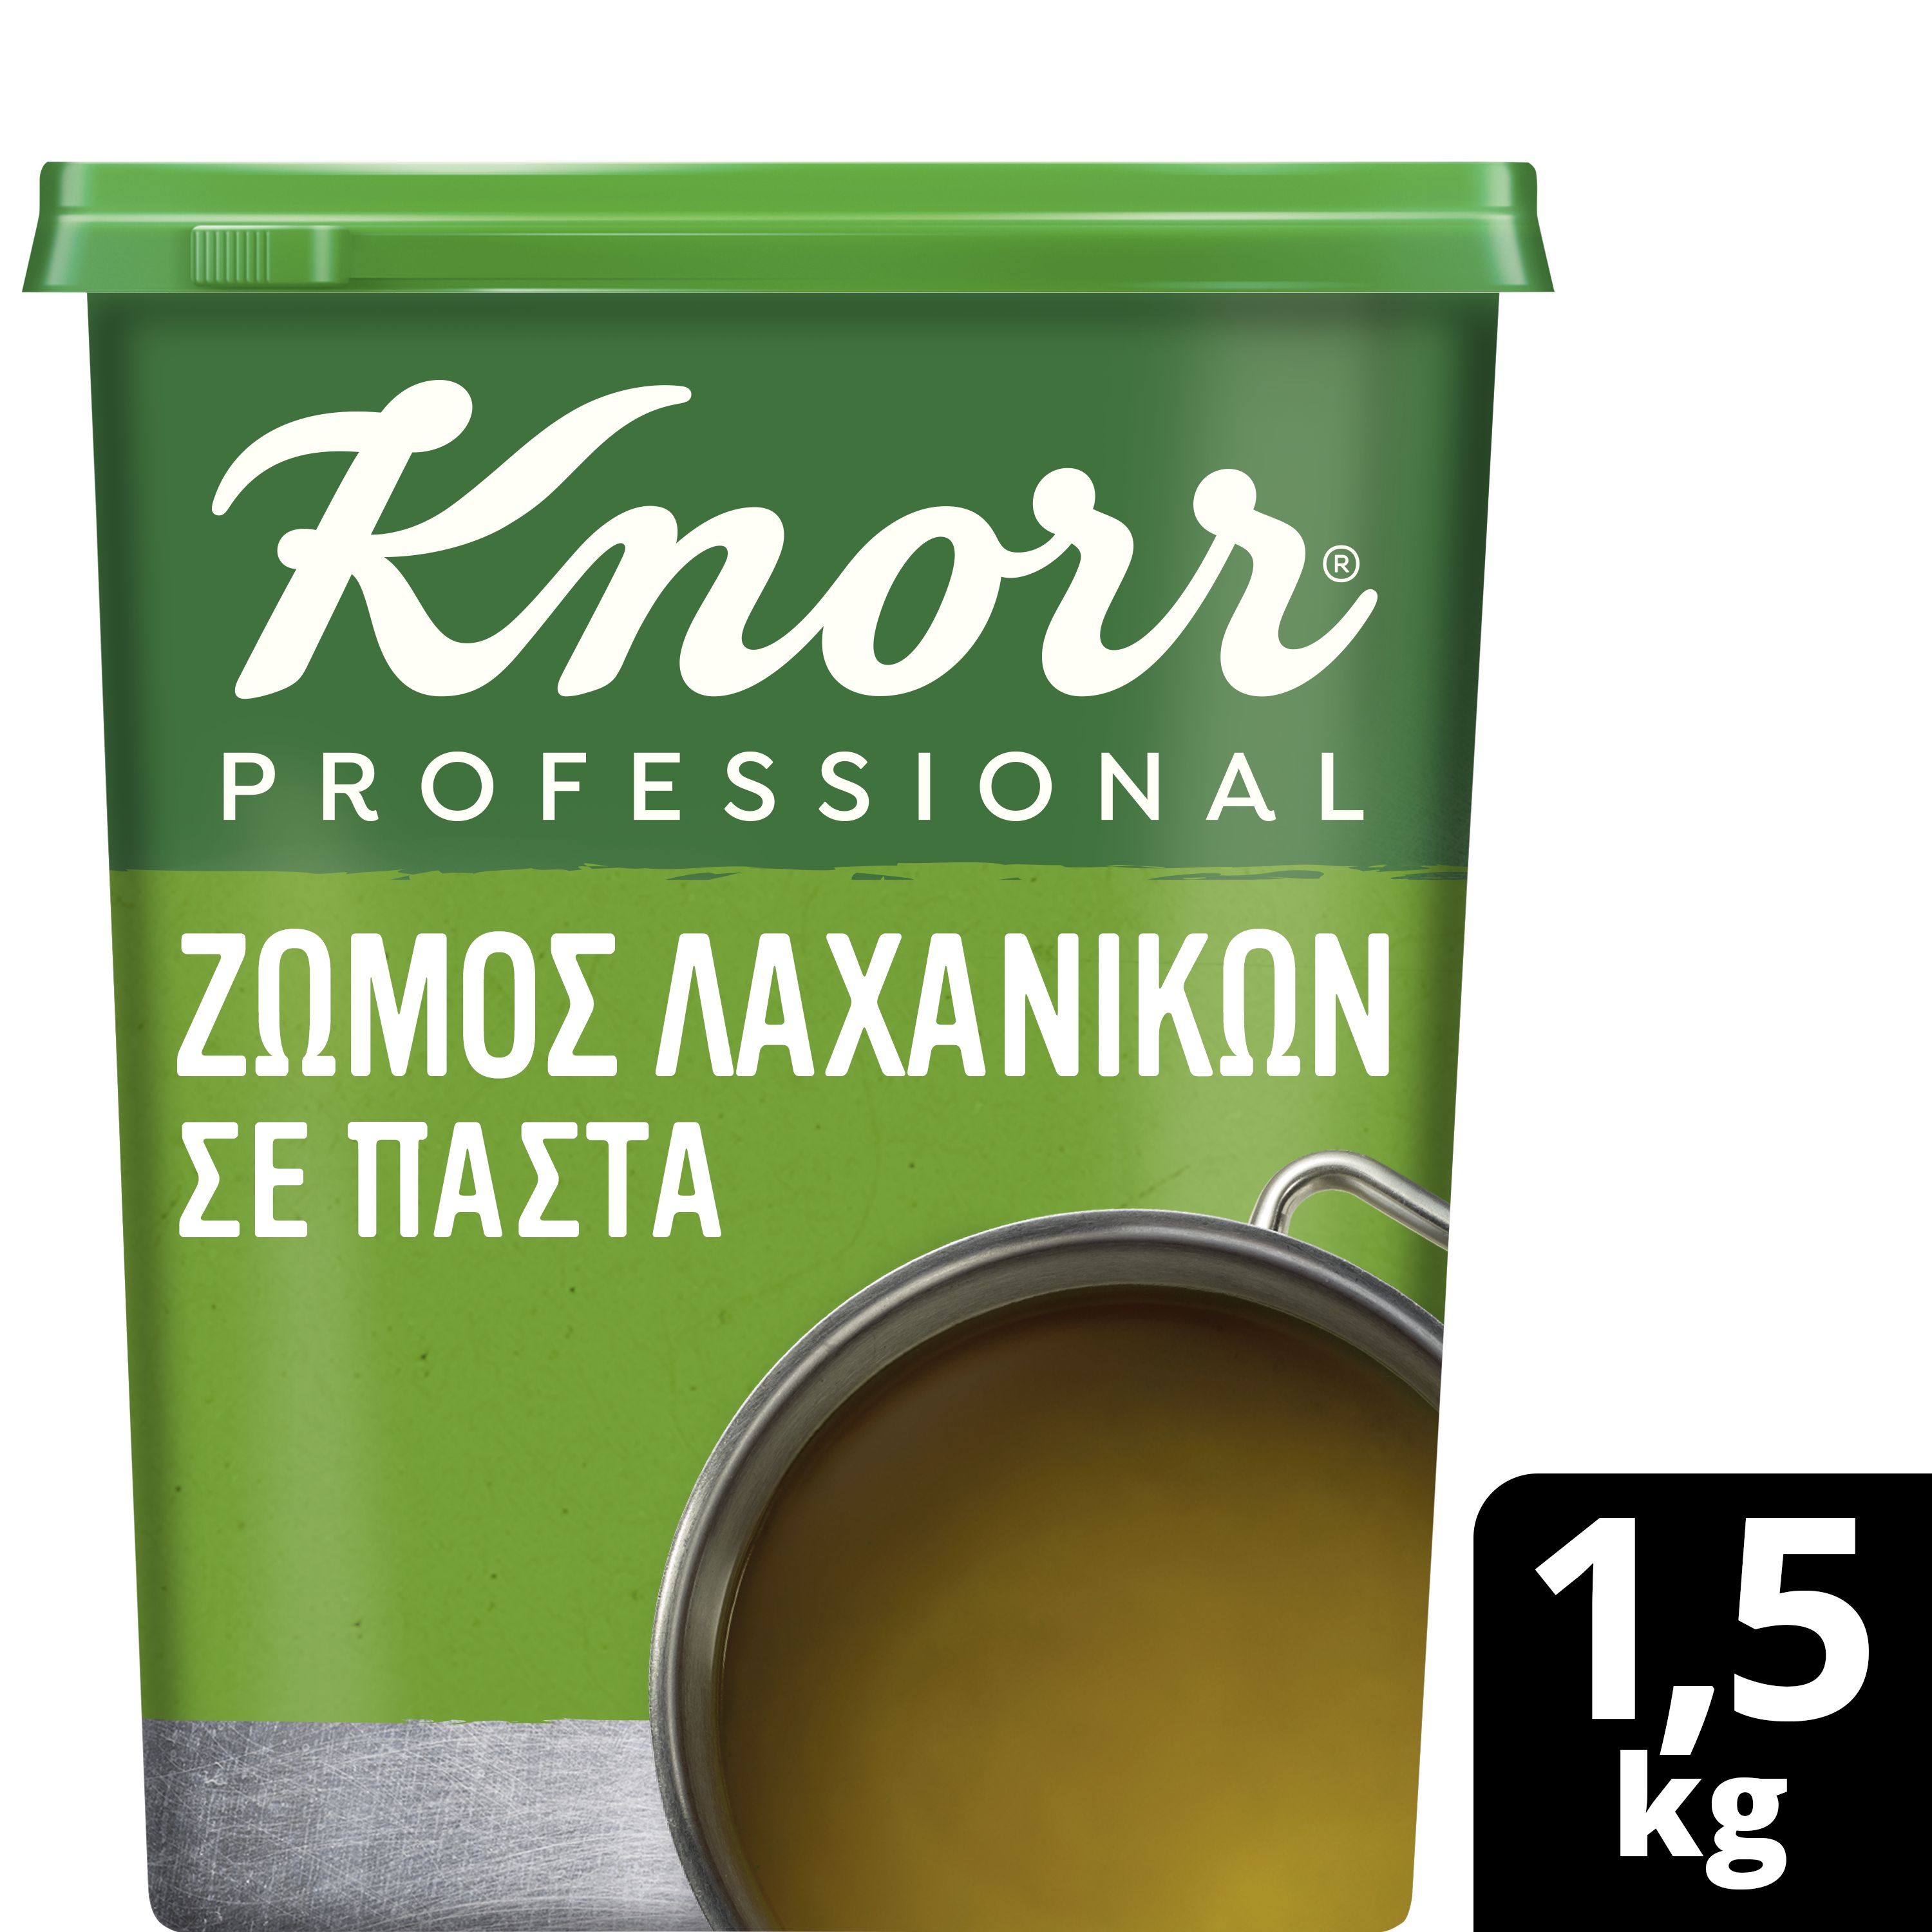 Knorr Ζωμός Λαχανικών σε Πάστα 1,5 kg